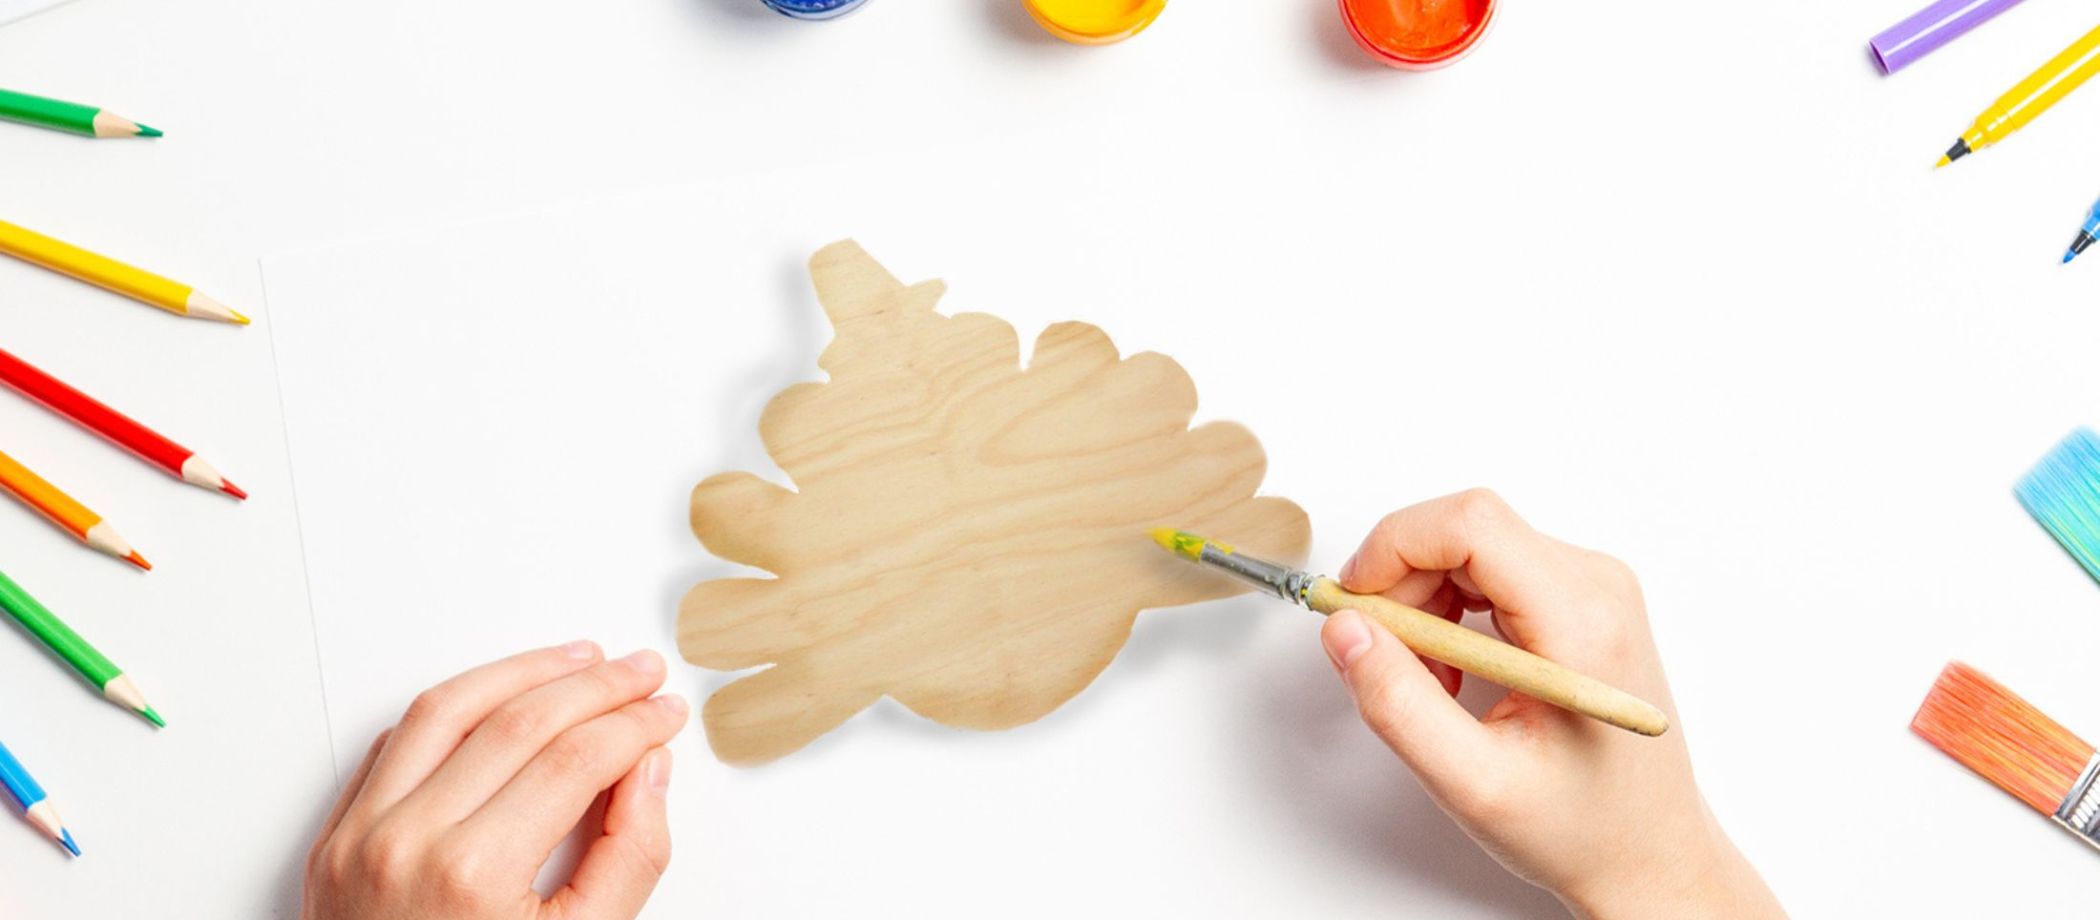 Create Your Own Wooden Turkey